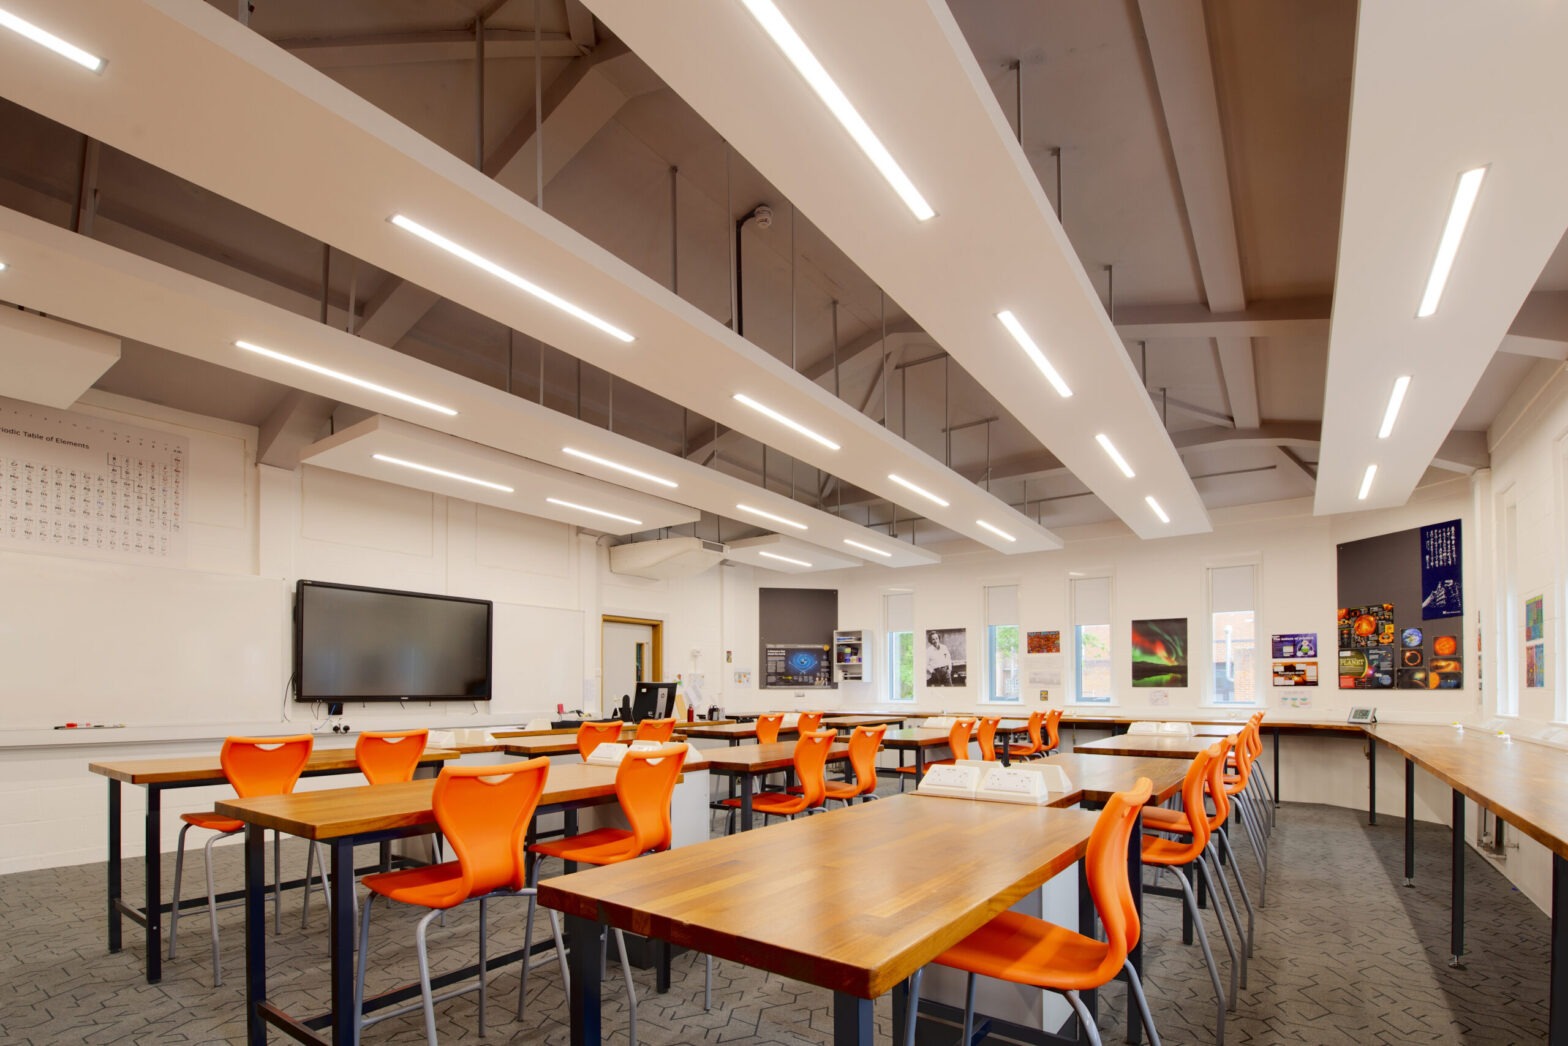 Tamlite education retrofit classroom image